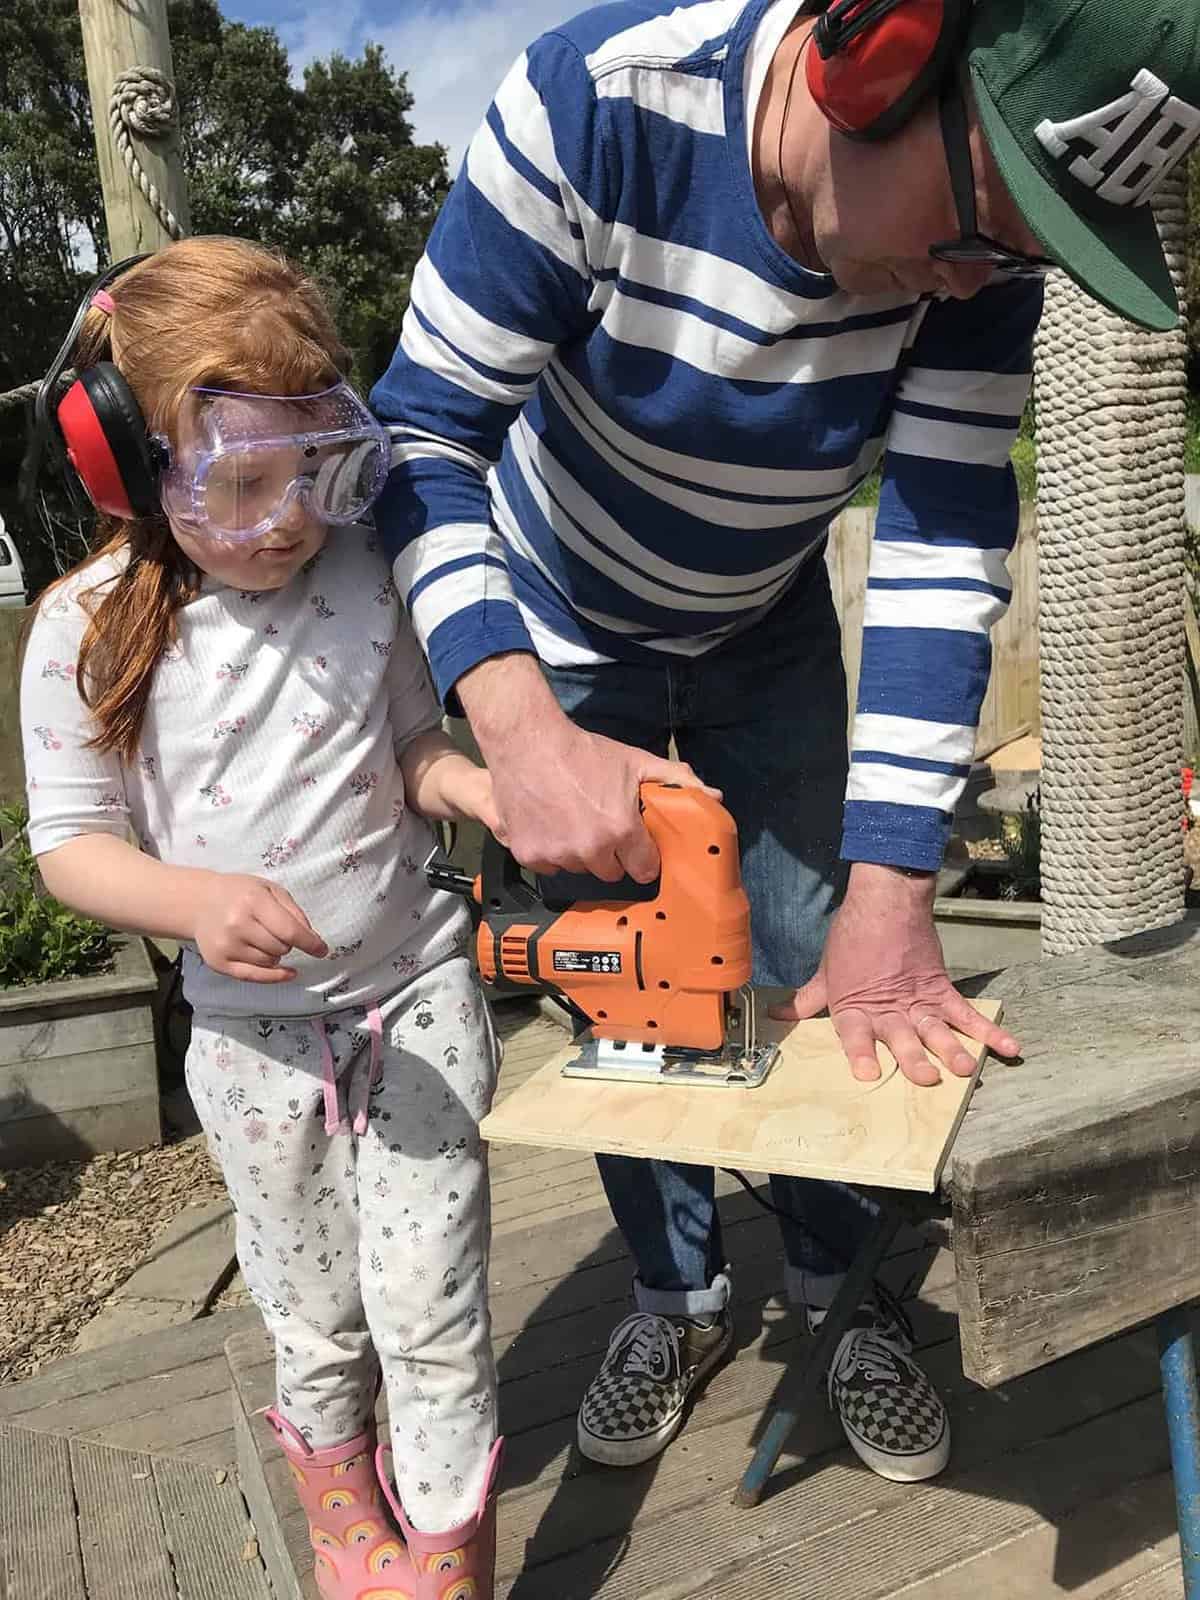 Woodworking with children